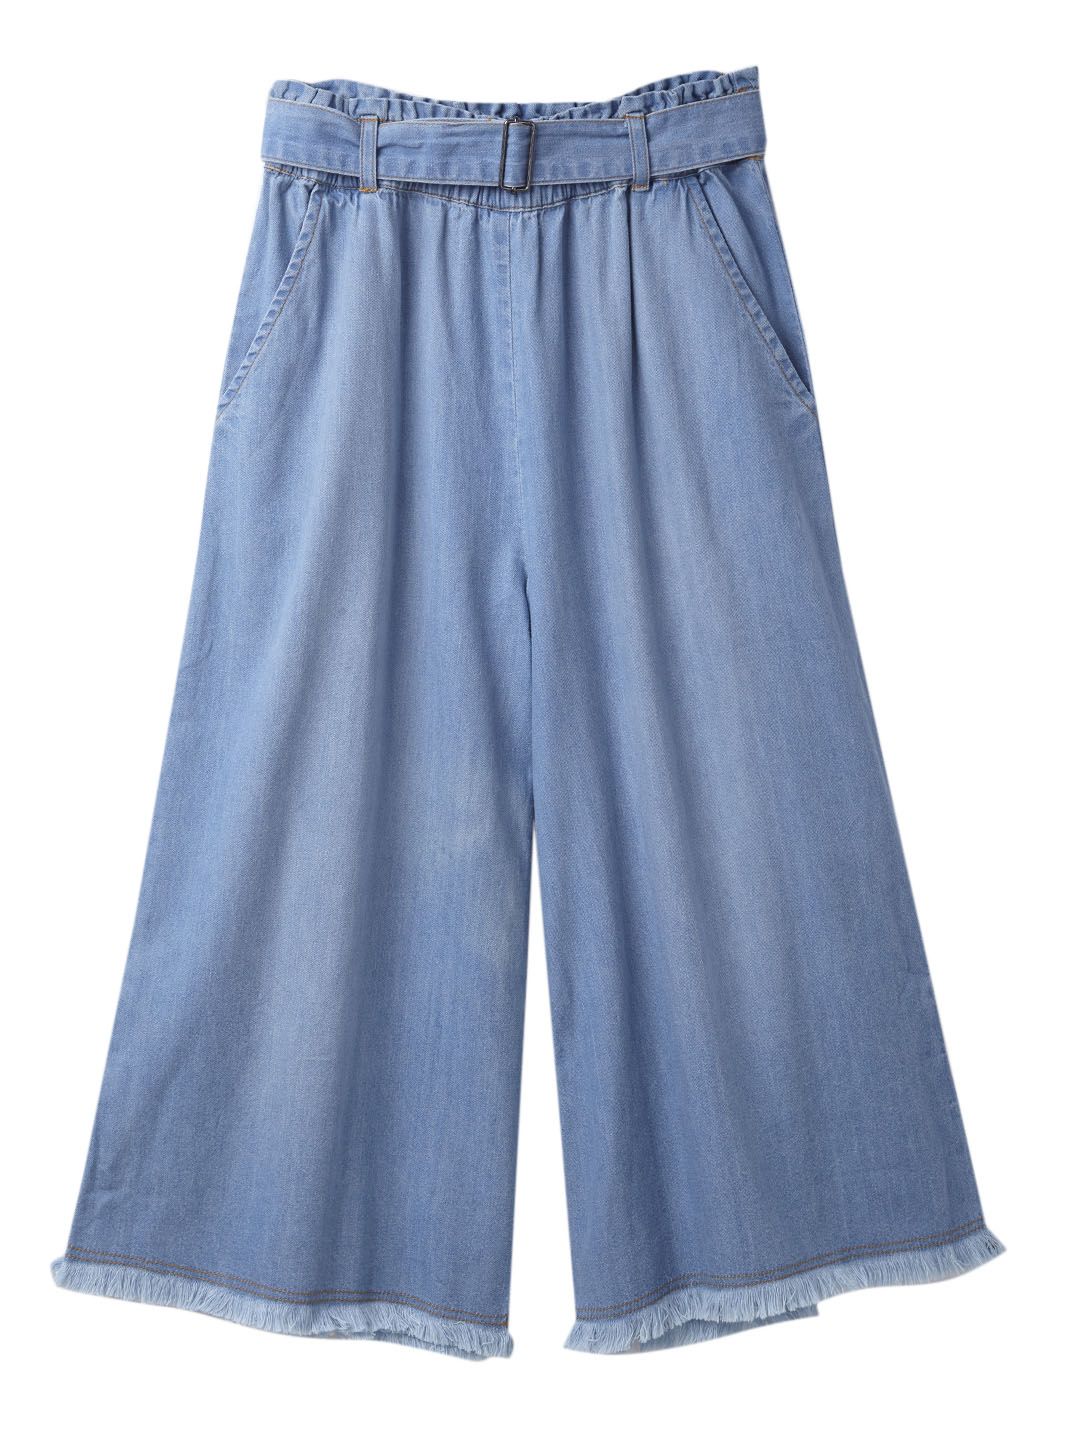 Linen Trousers for Women | Next Official Site